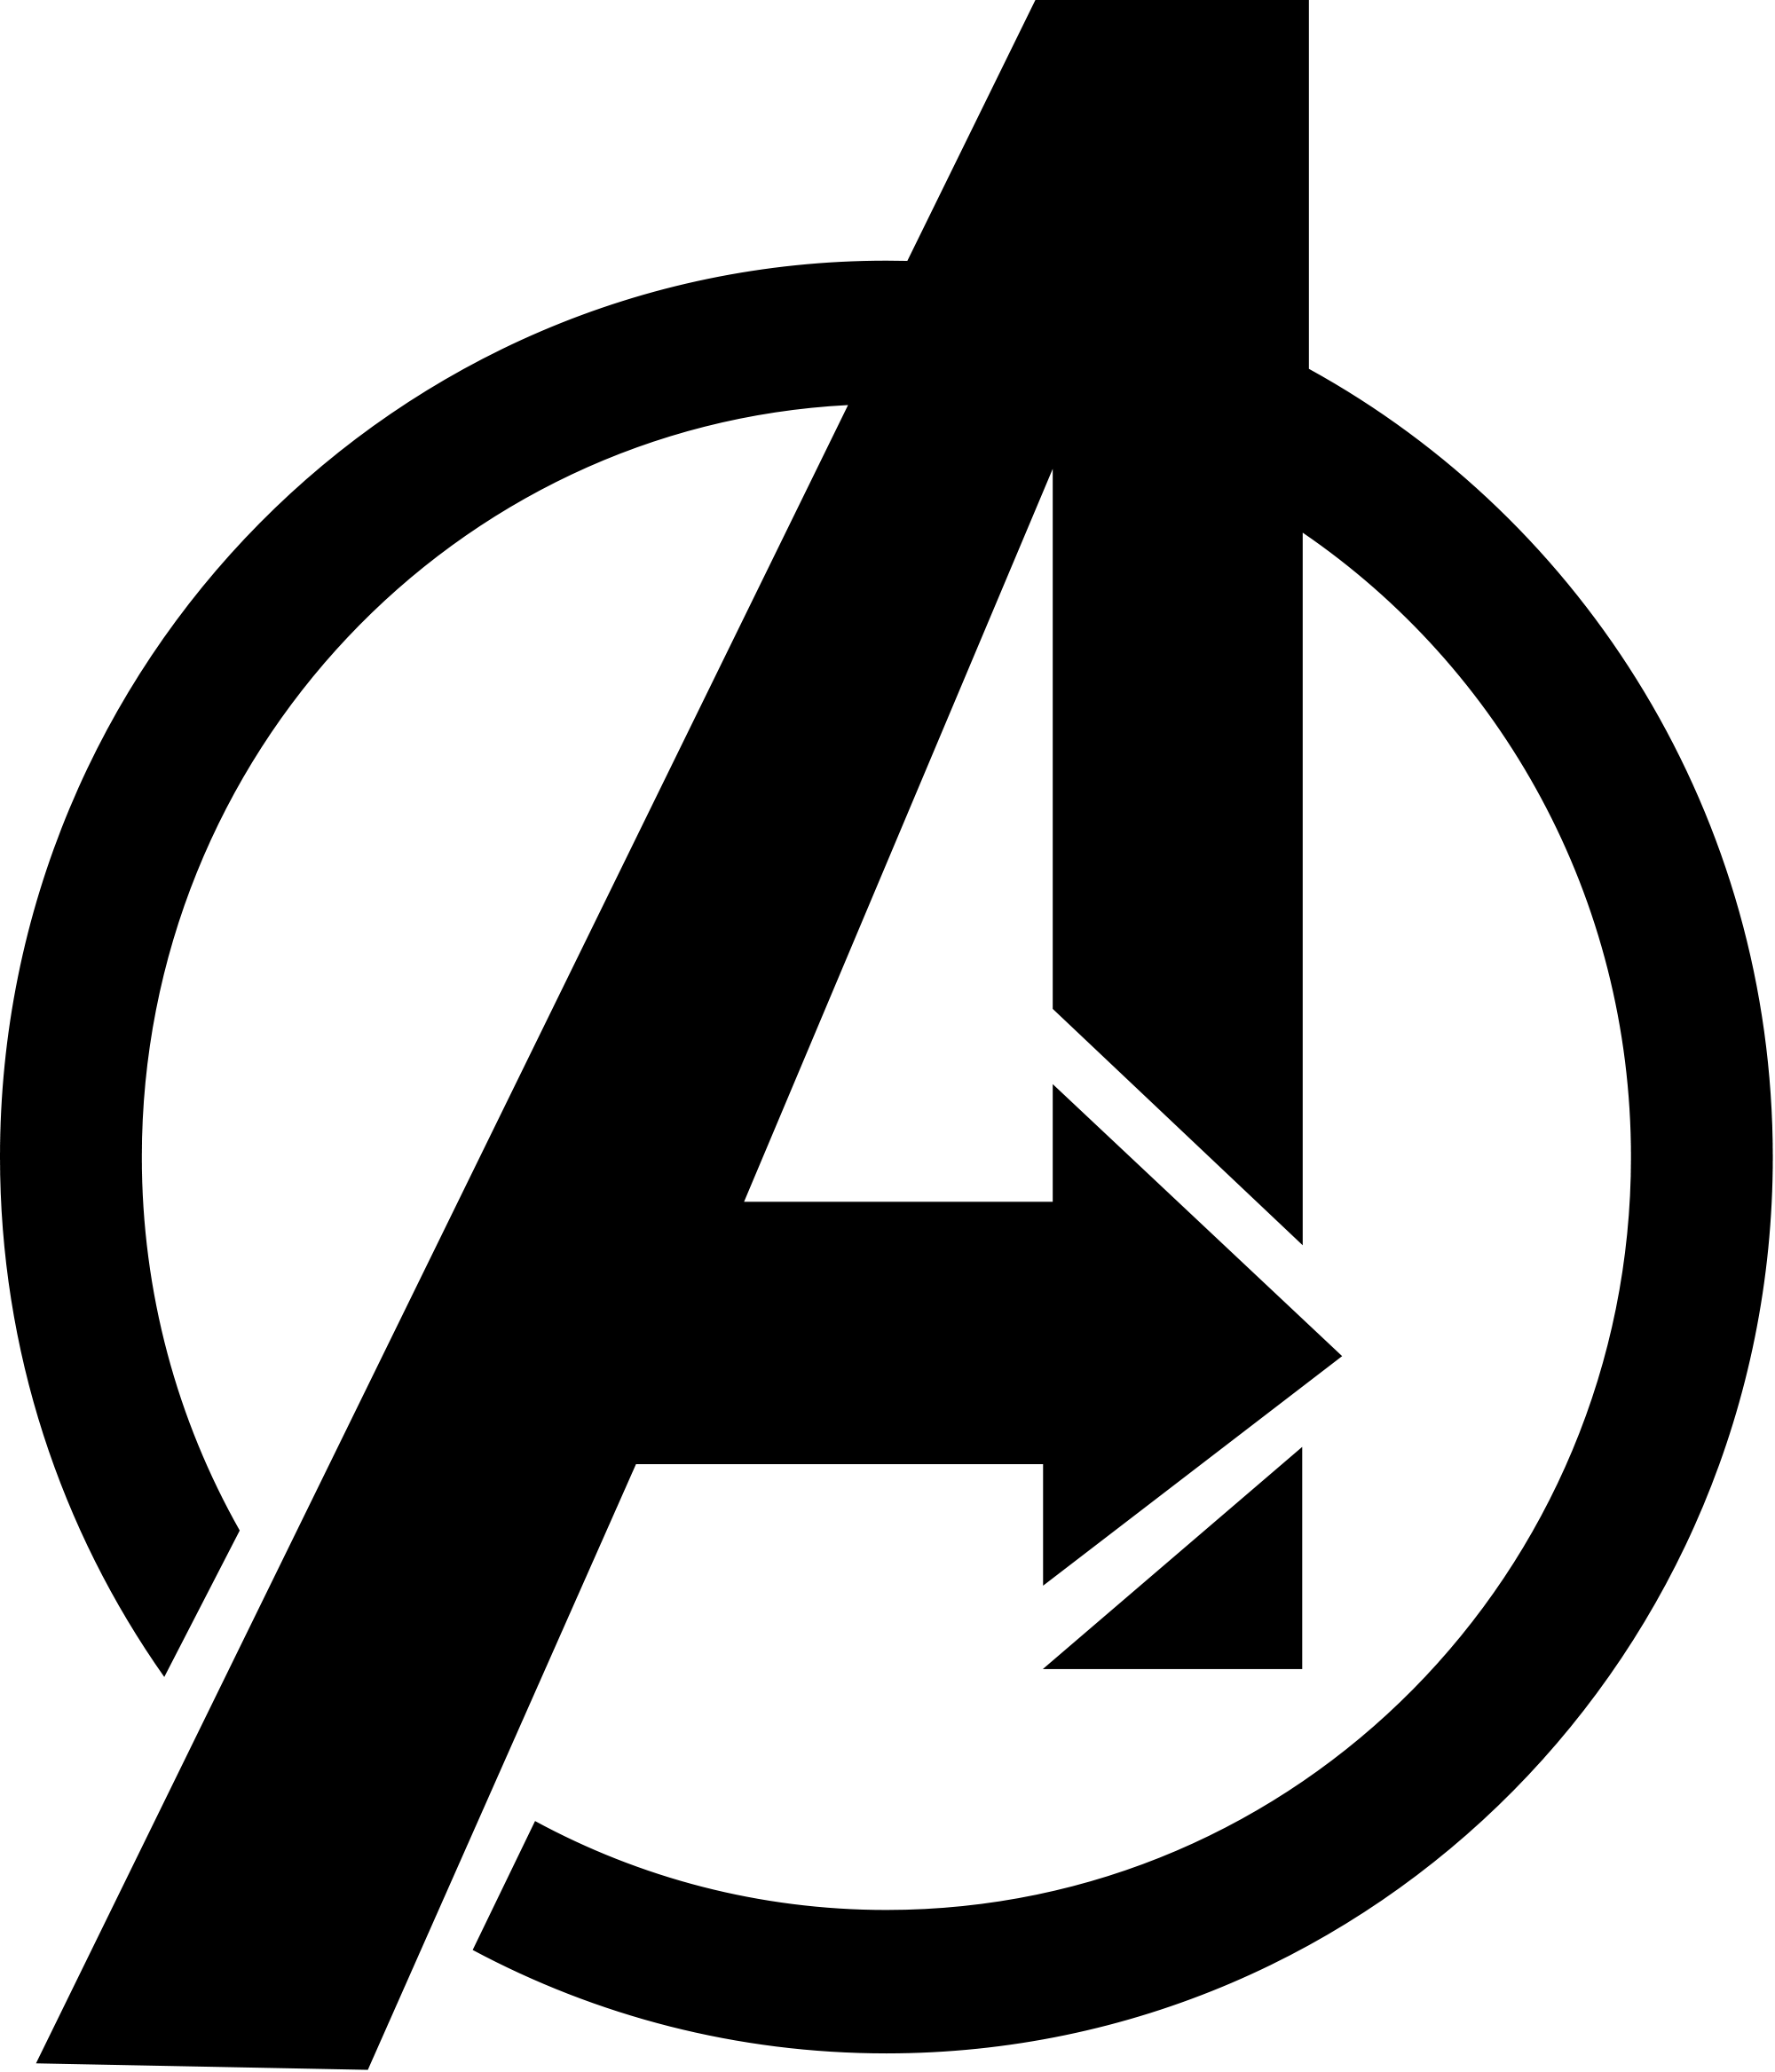 All the Avengers Logo - File:Symbol from Marvel's The Avengers logo.svg - Wikimedia Commons